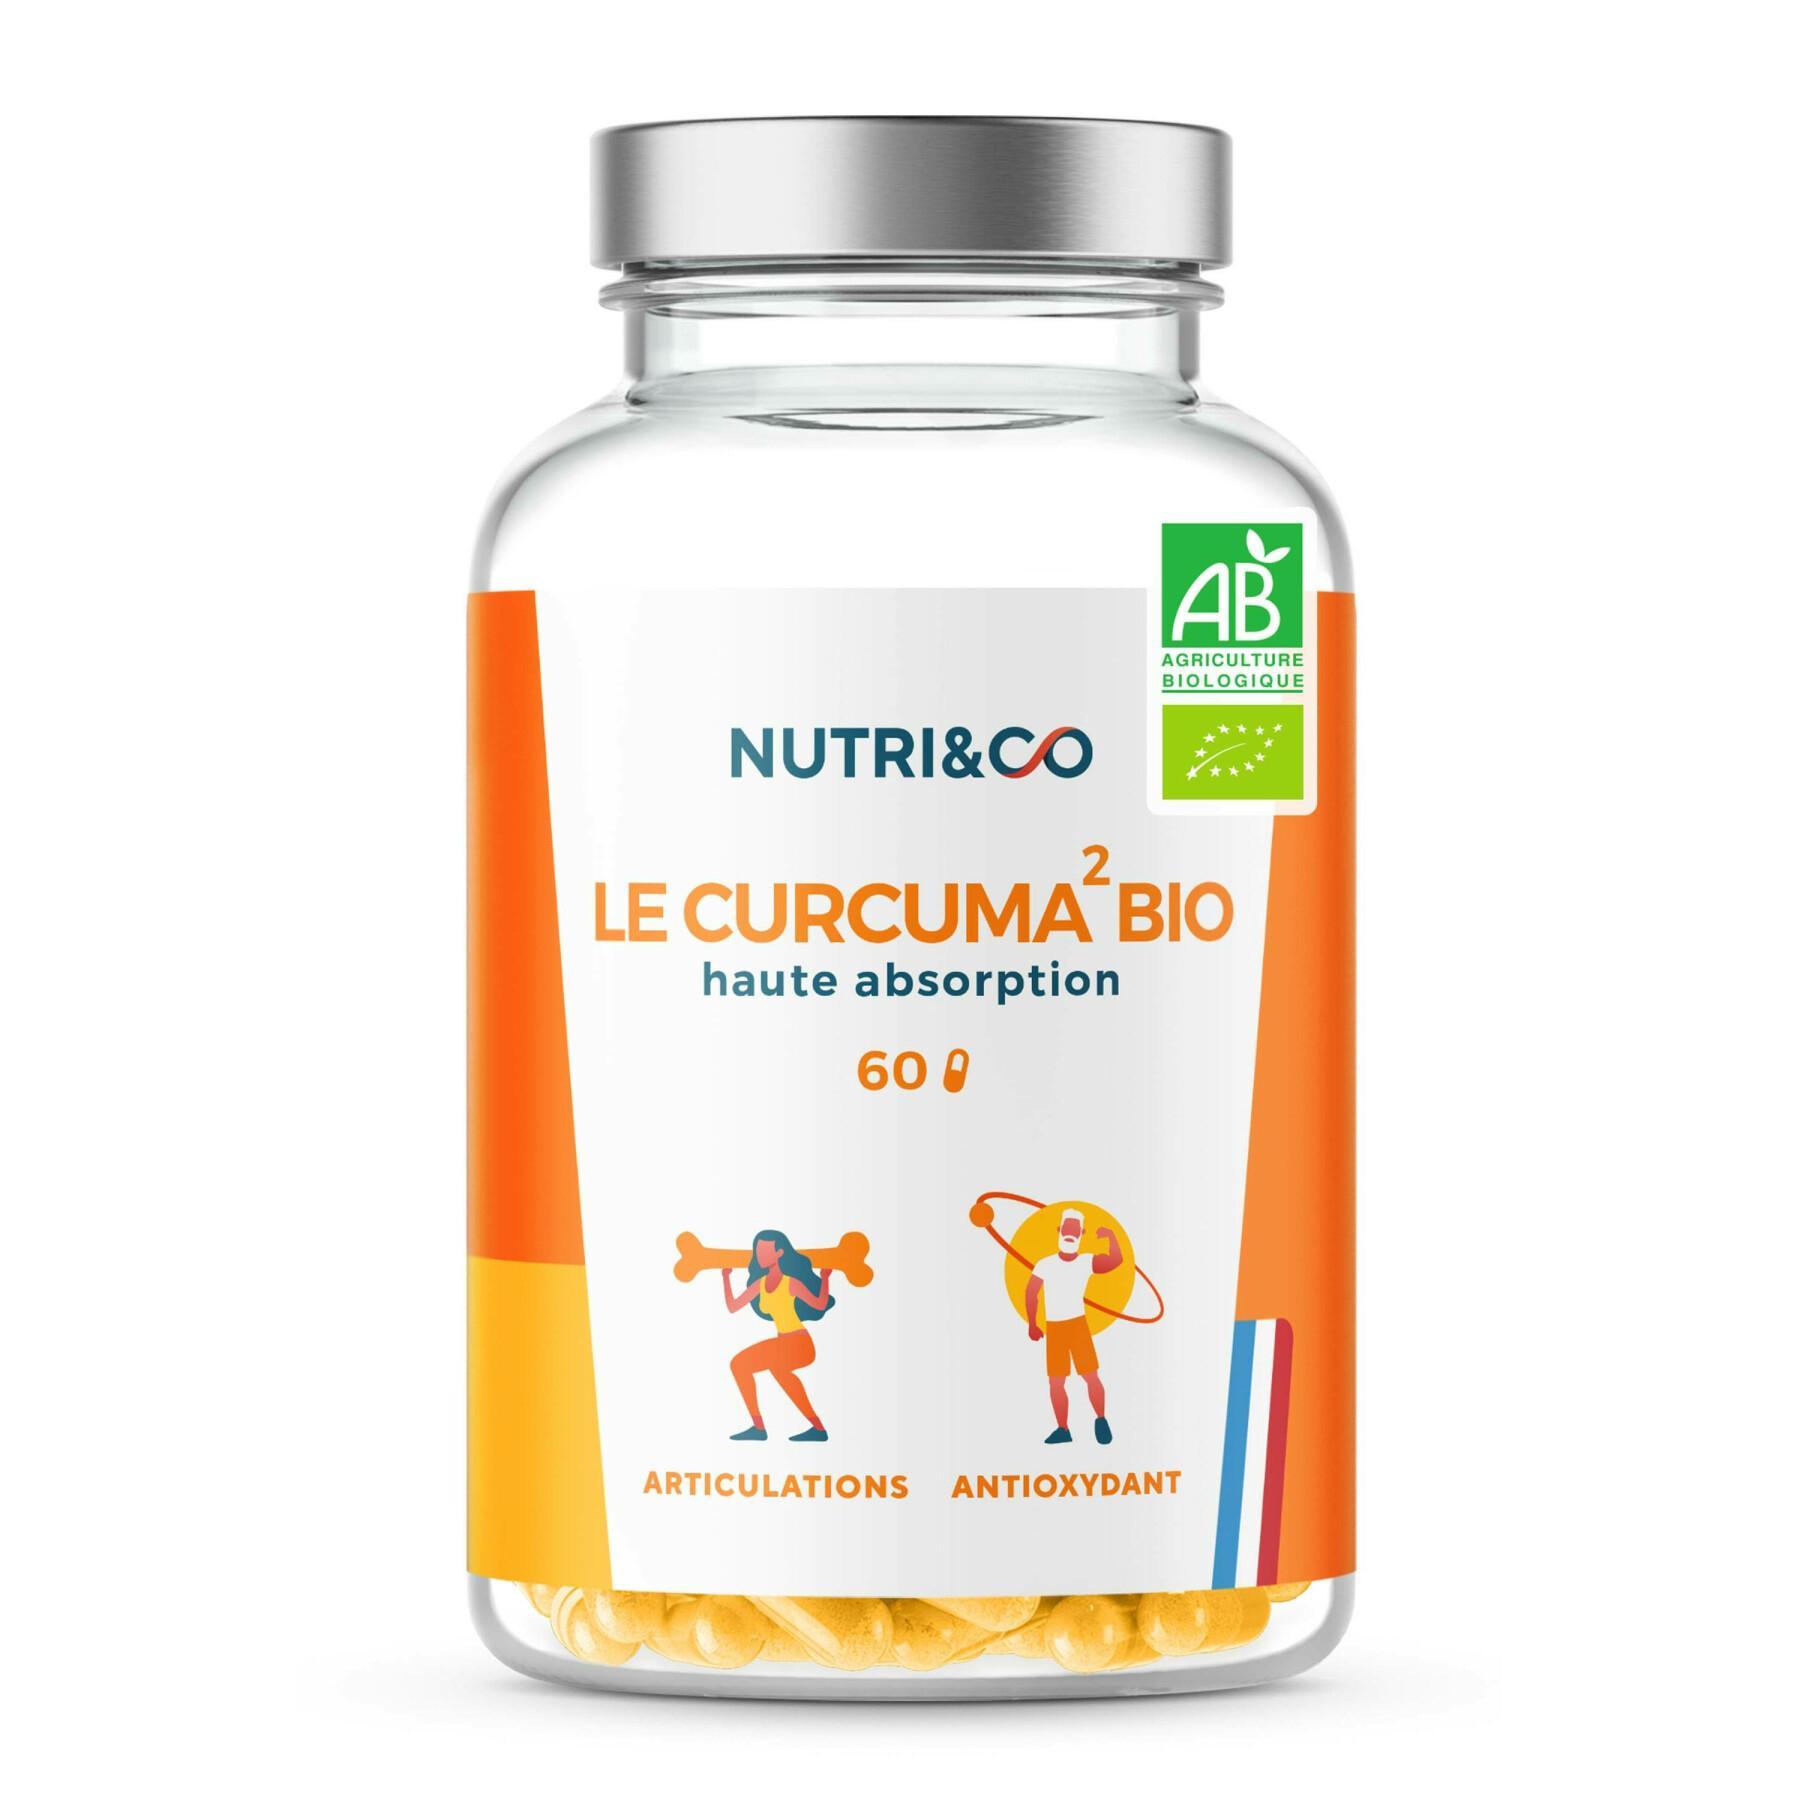 60 capsules of organic turmeric Nutri&Co